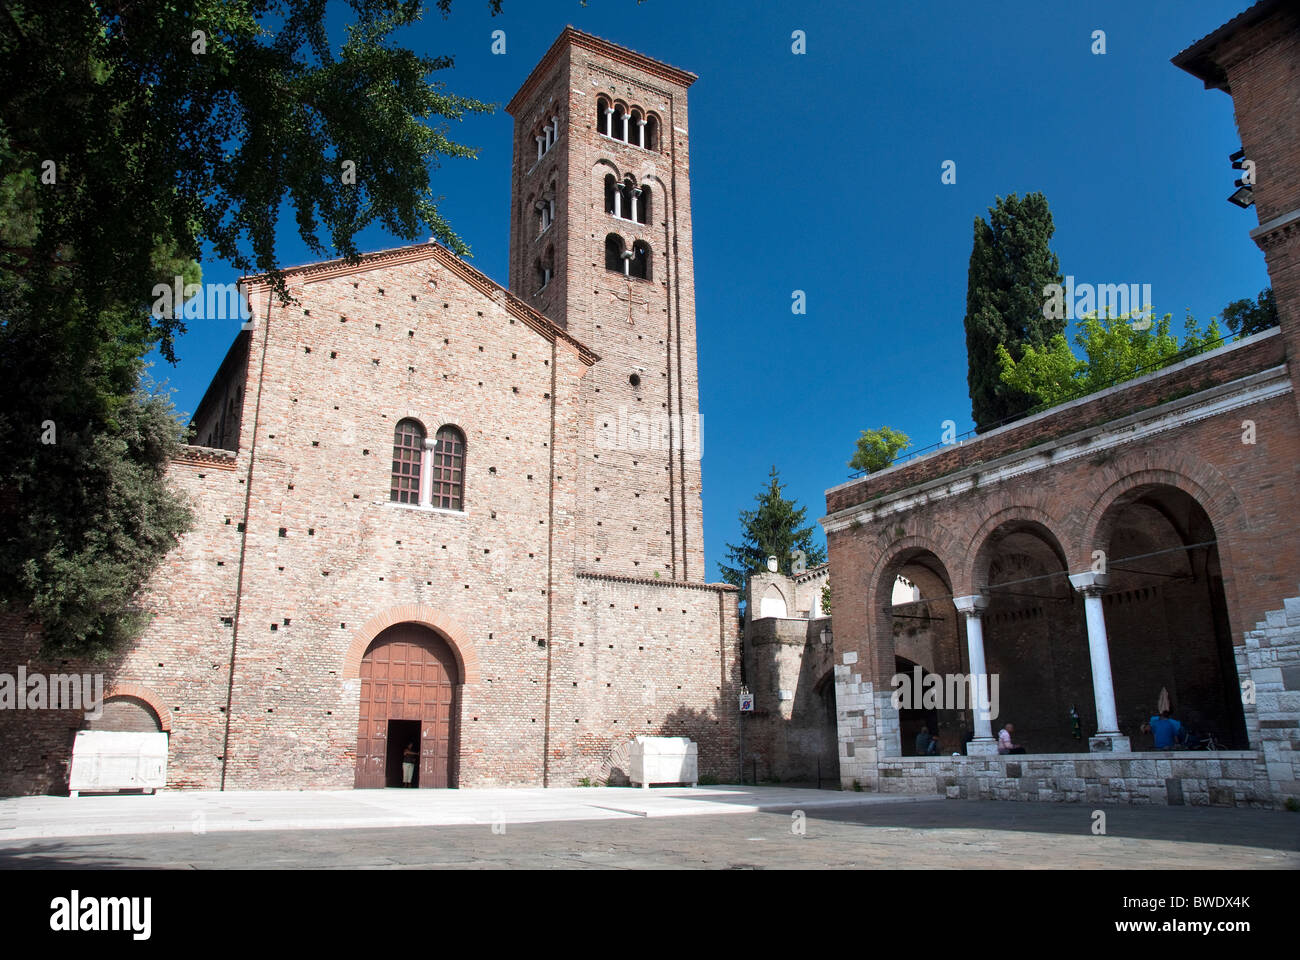 Church of Saint Francis, Basilica di San Francesco, and piazza in Ravenna Stock Photo